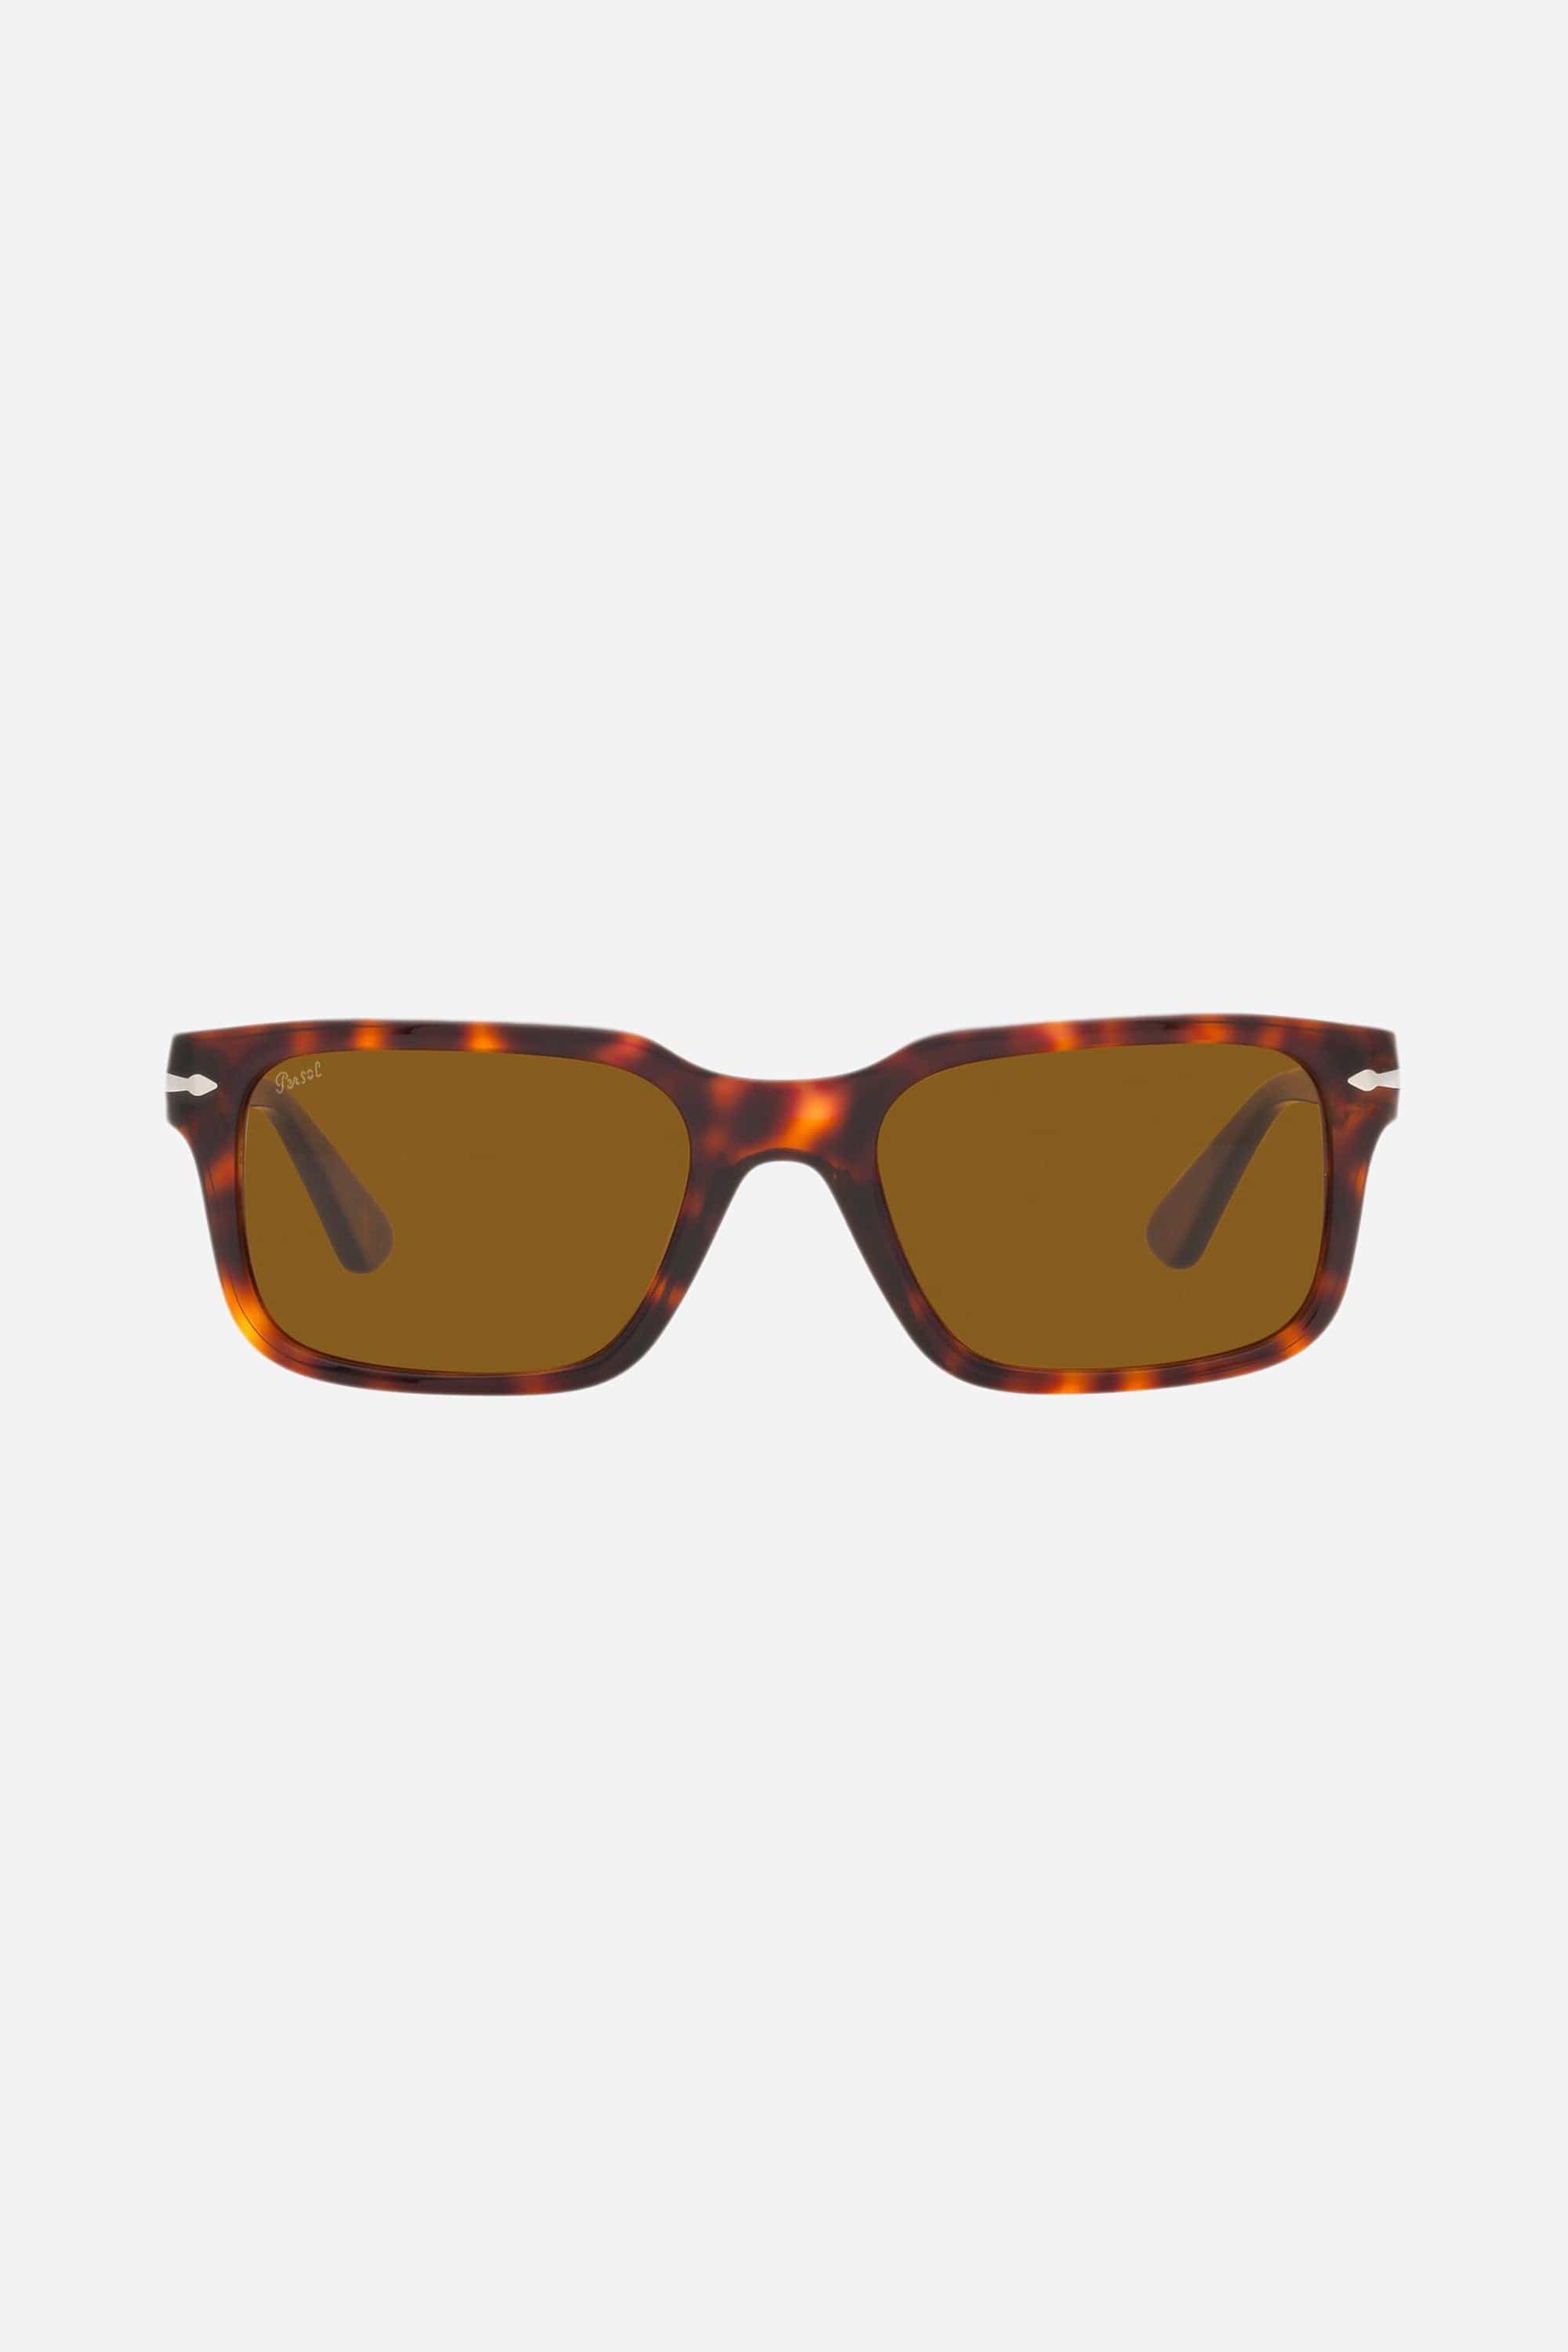 Persol squared red havana sunglasses - Eyewear Club